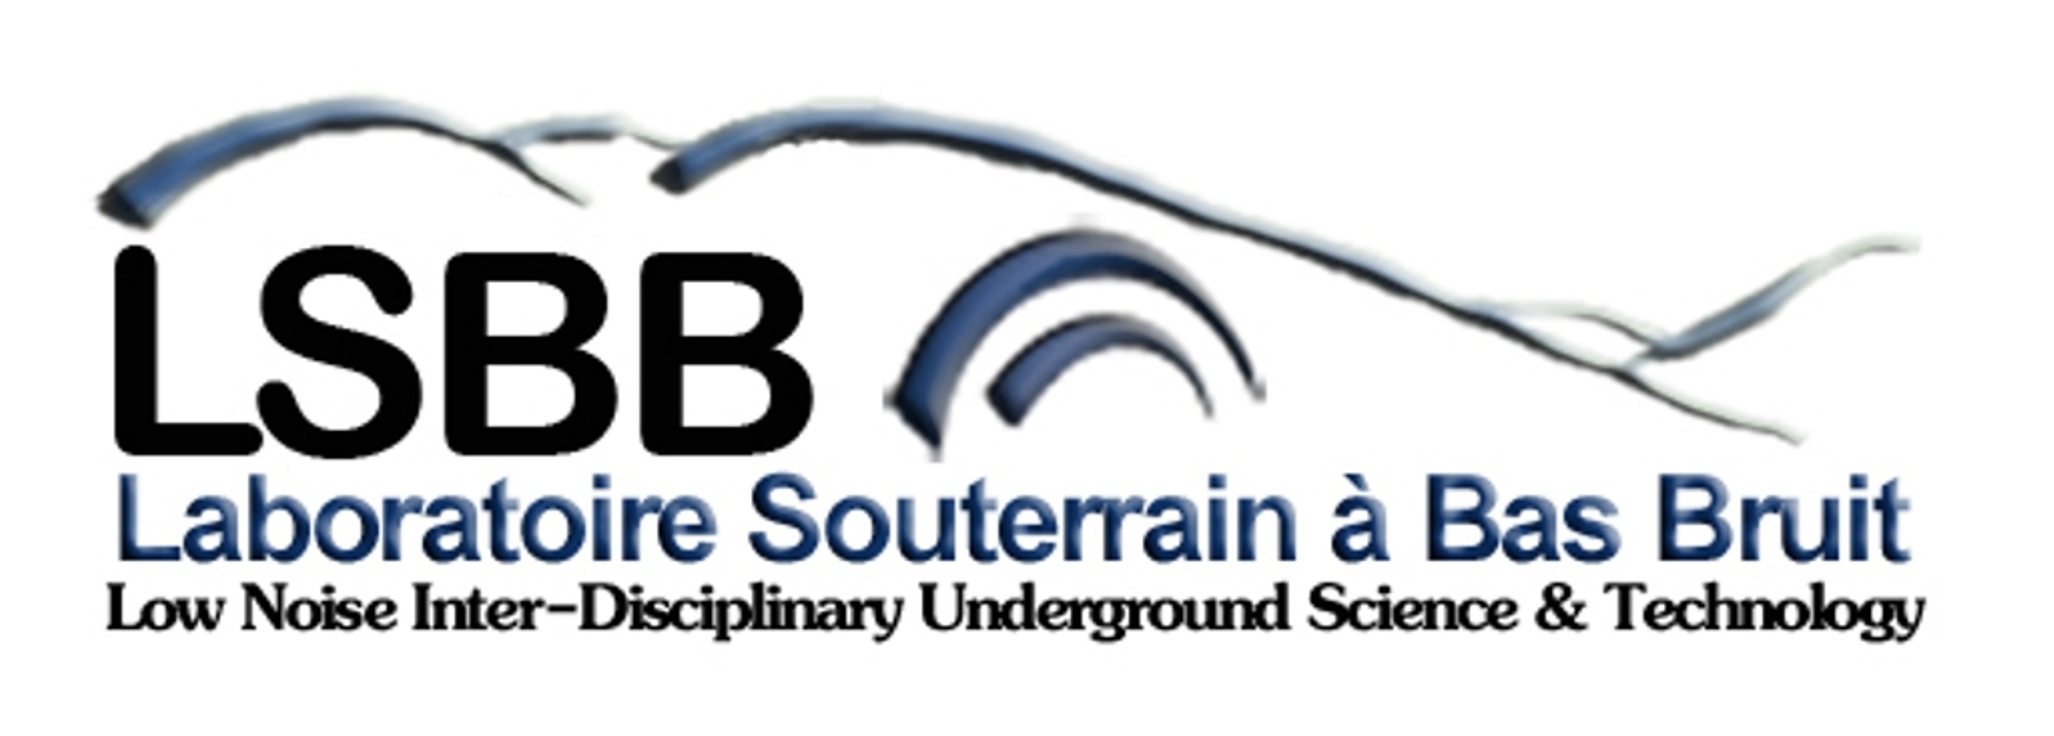 LSBB logo2